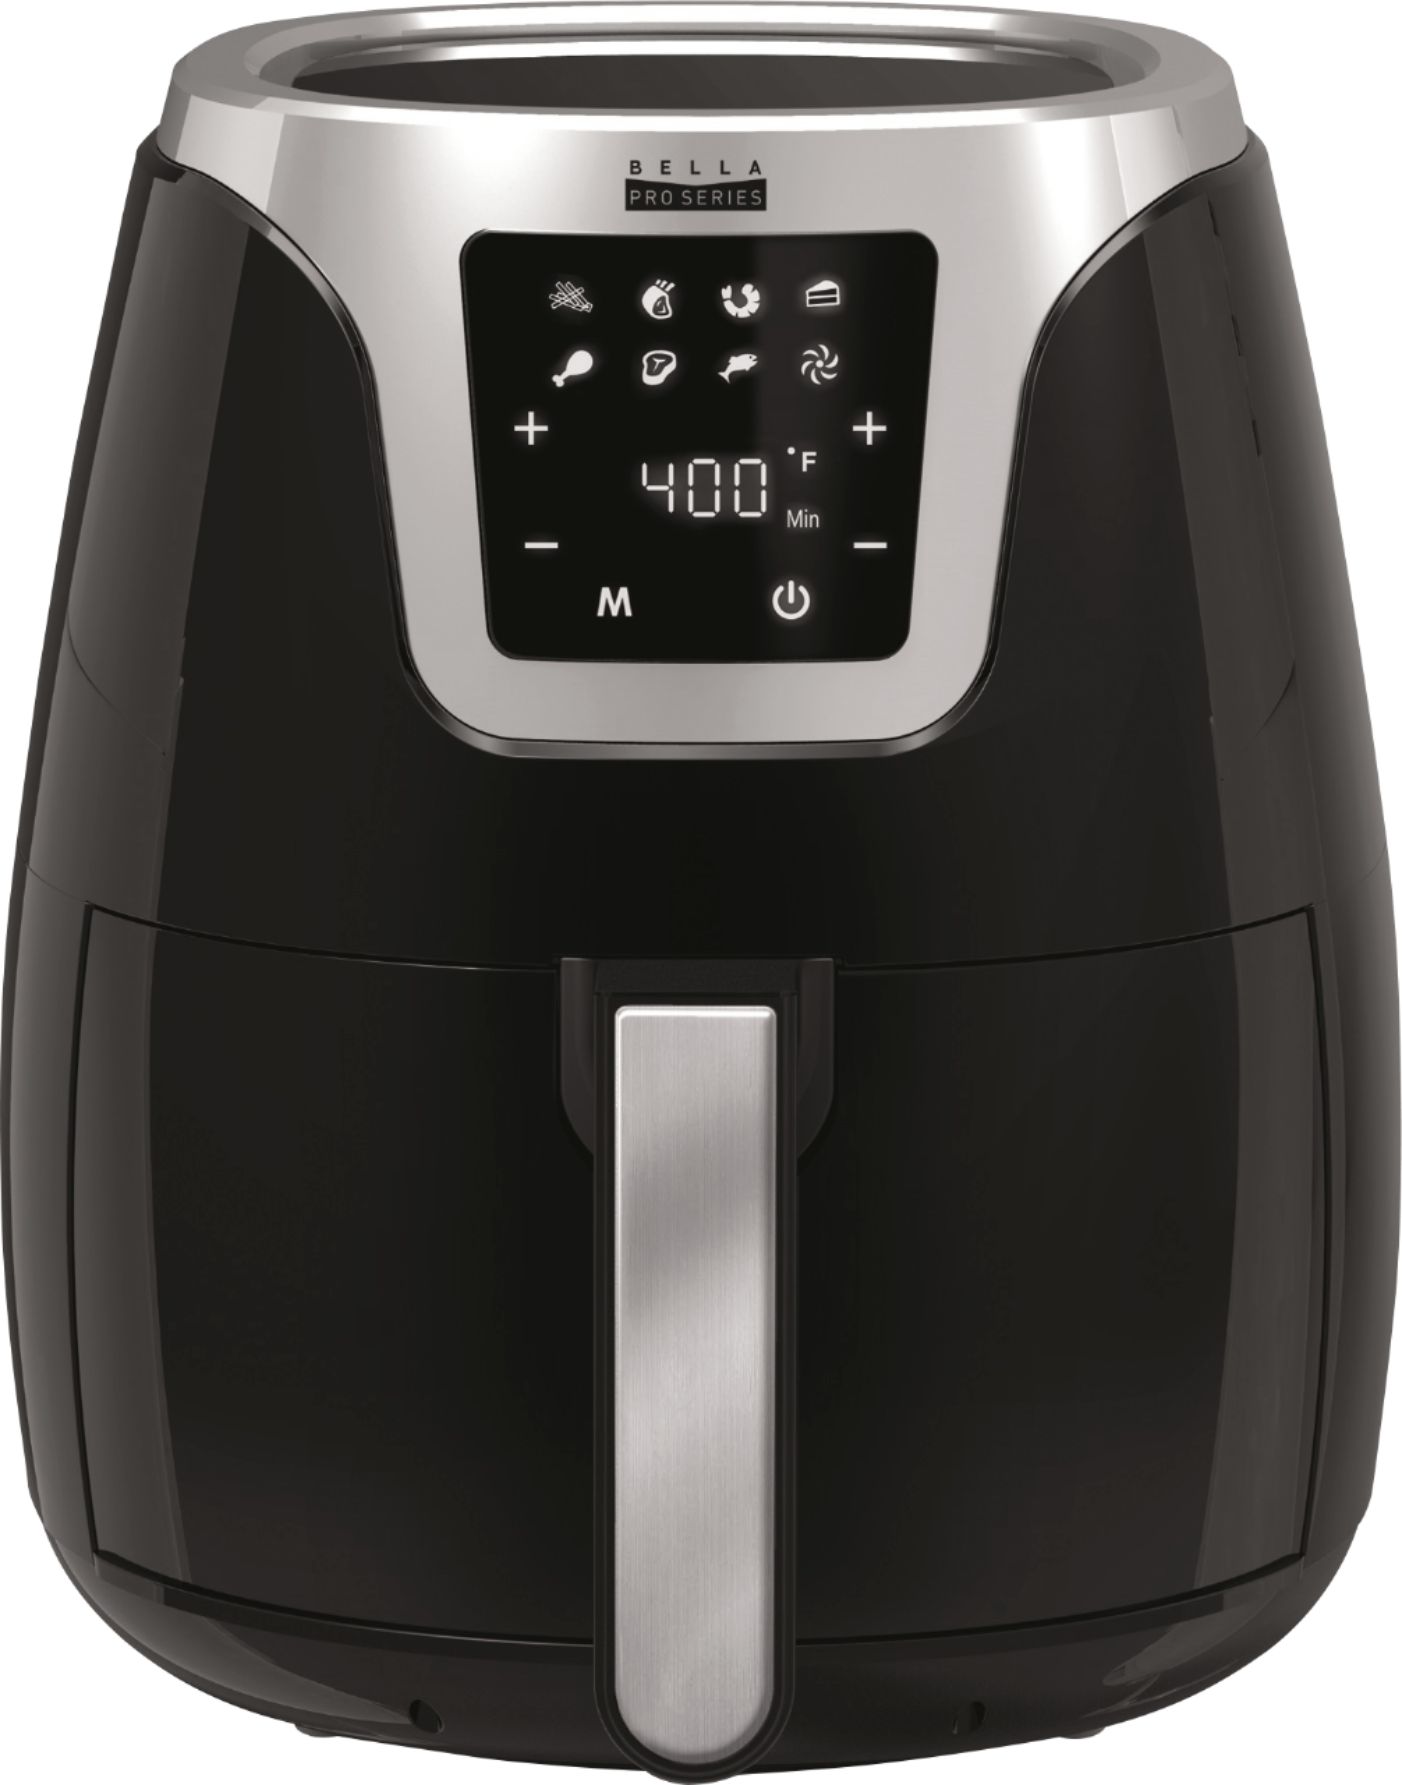 Bella Pro Series 4.5qt Digital Air Fryer Black 90084 - Best Buy